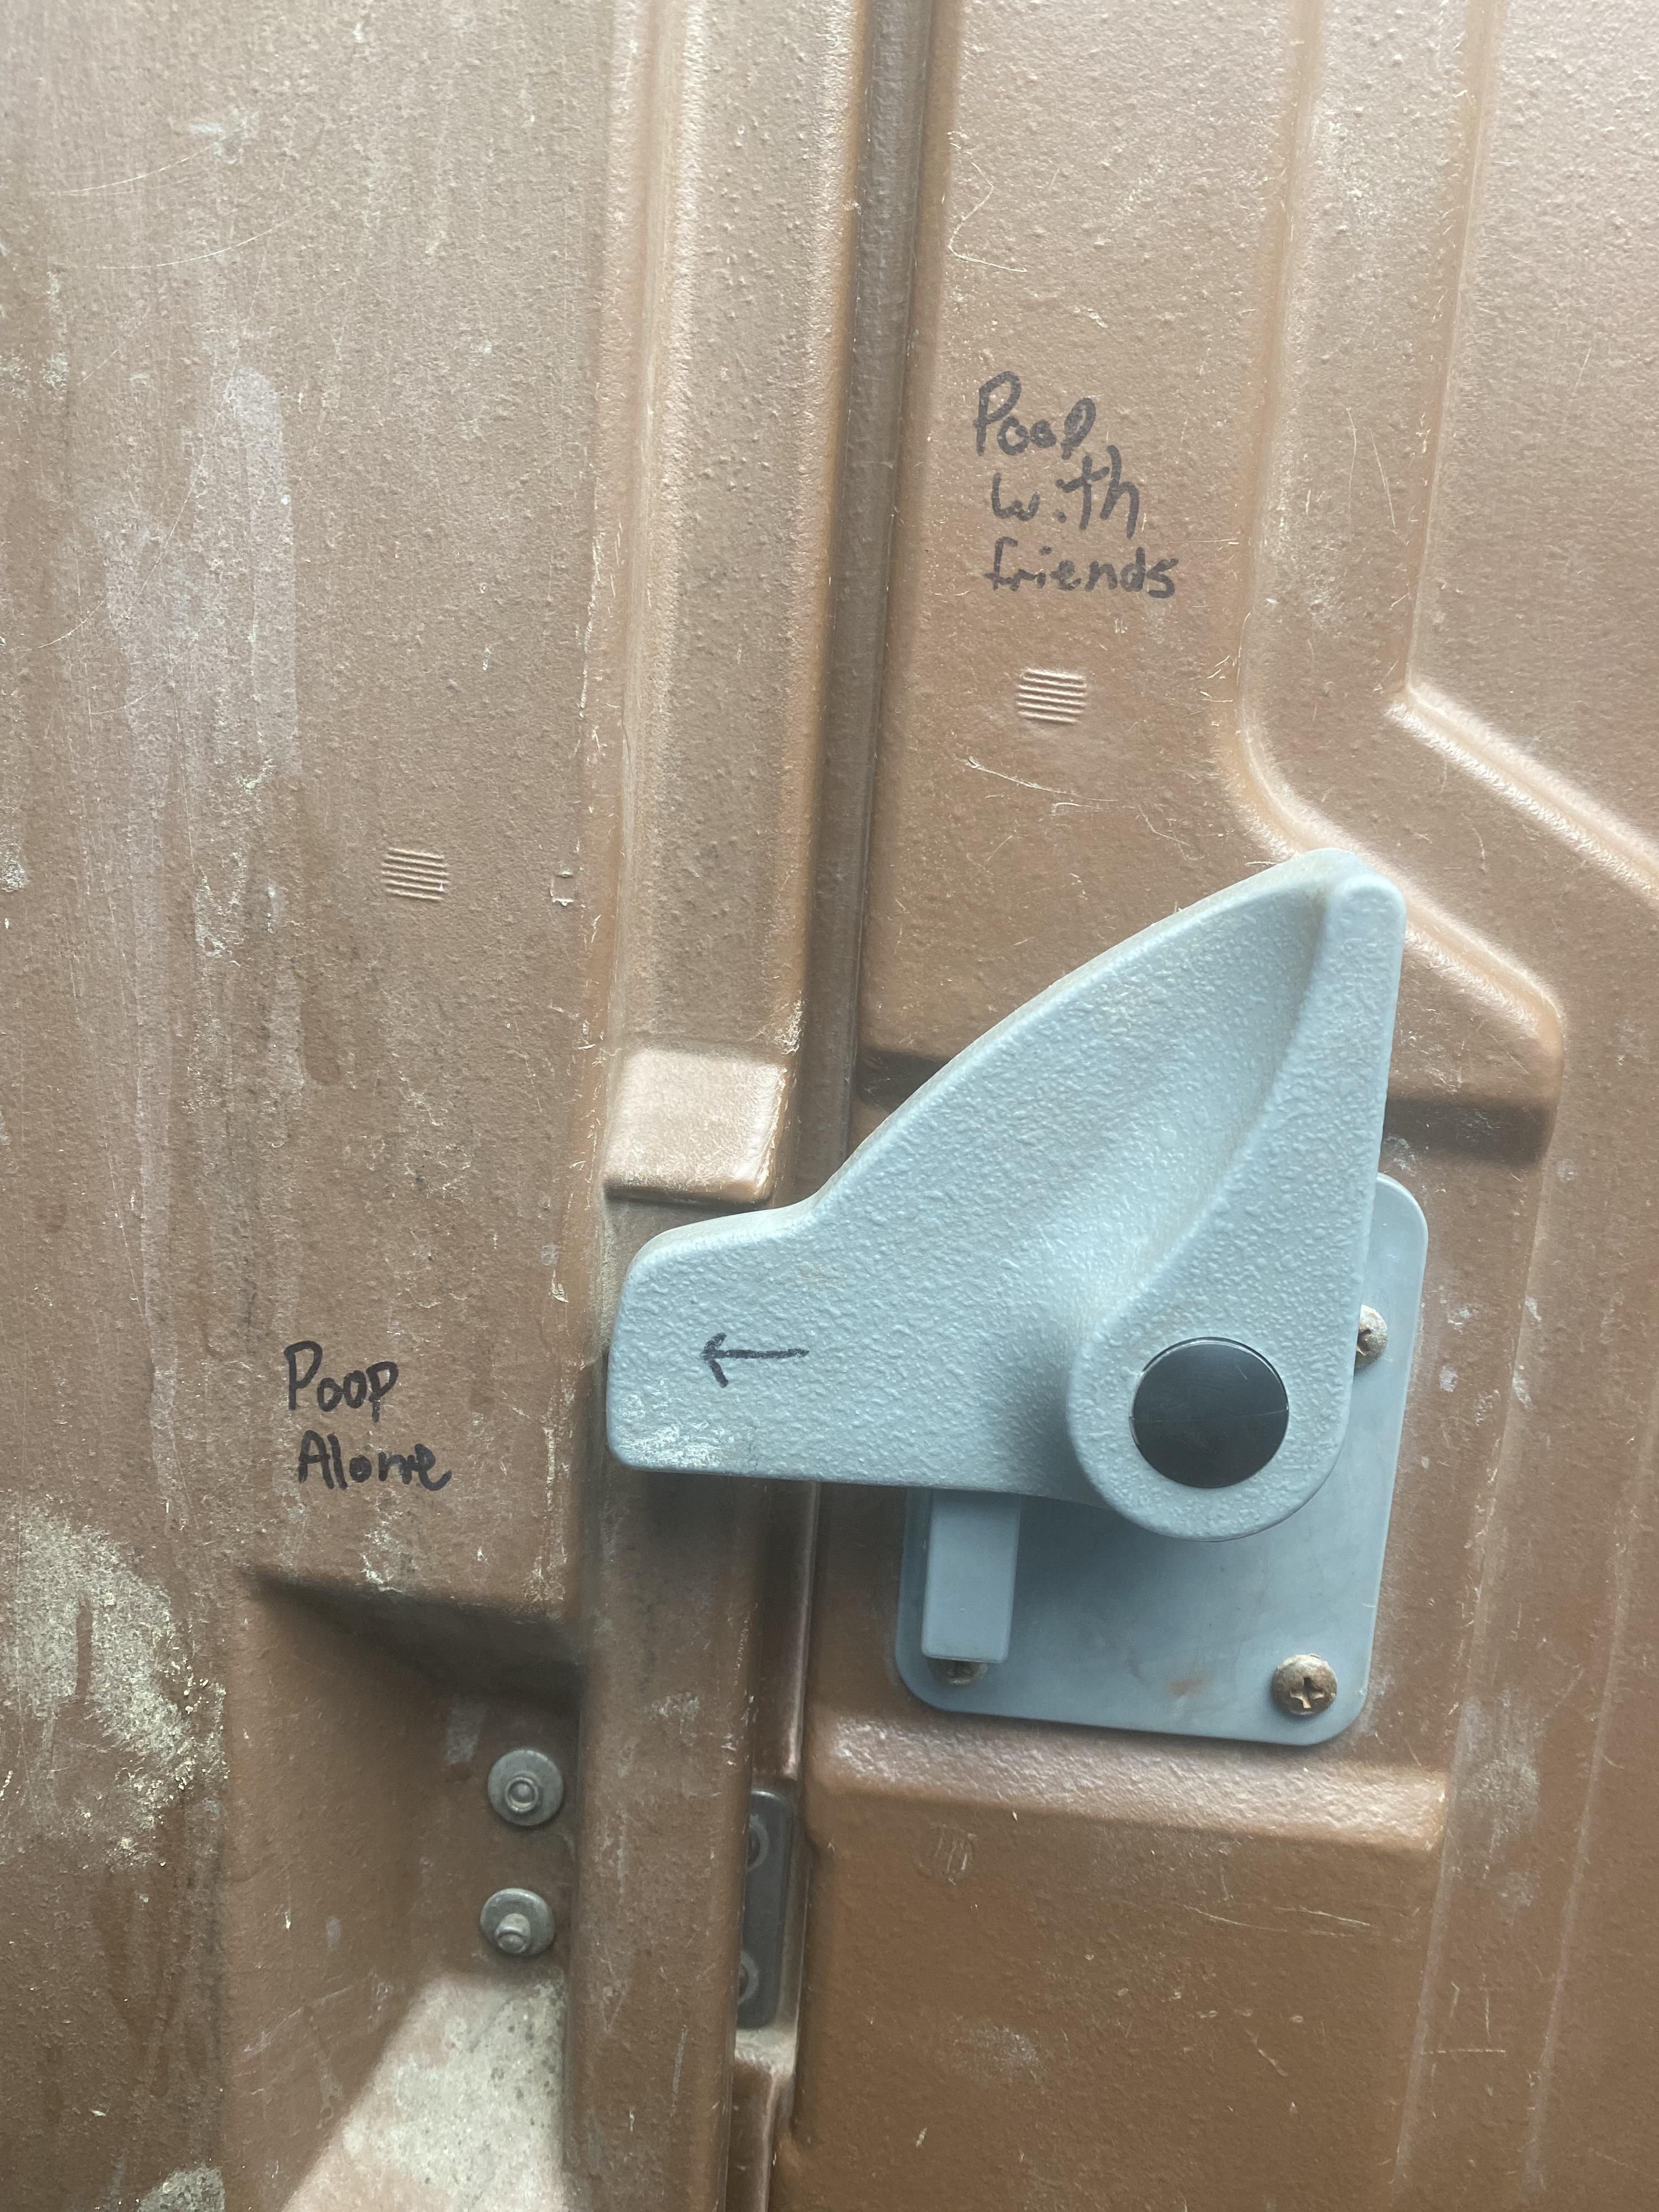 The porta-potty on the job site